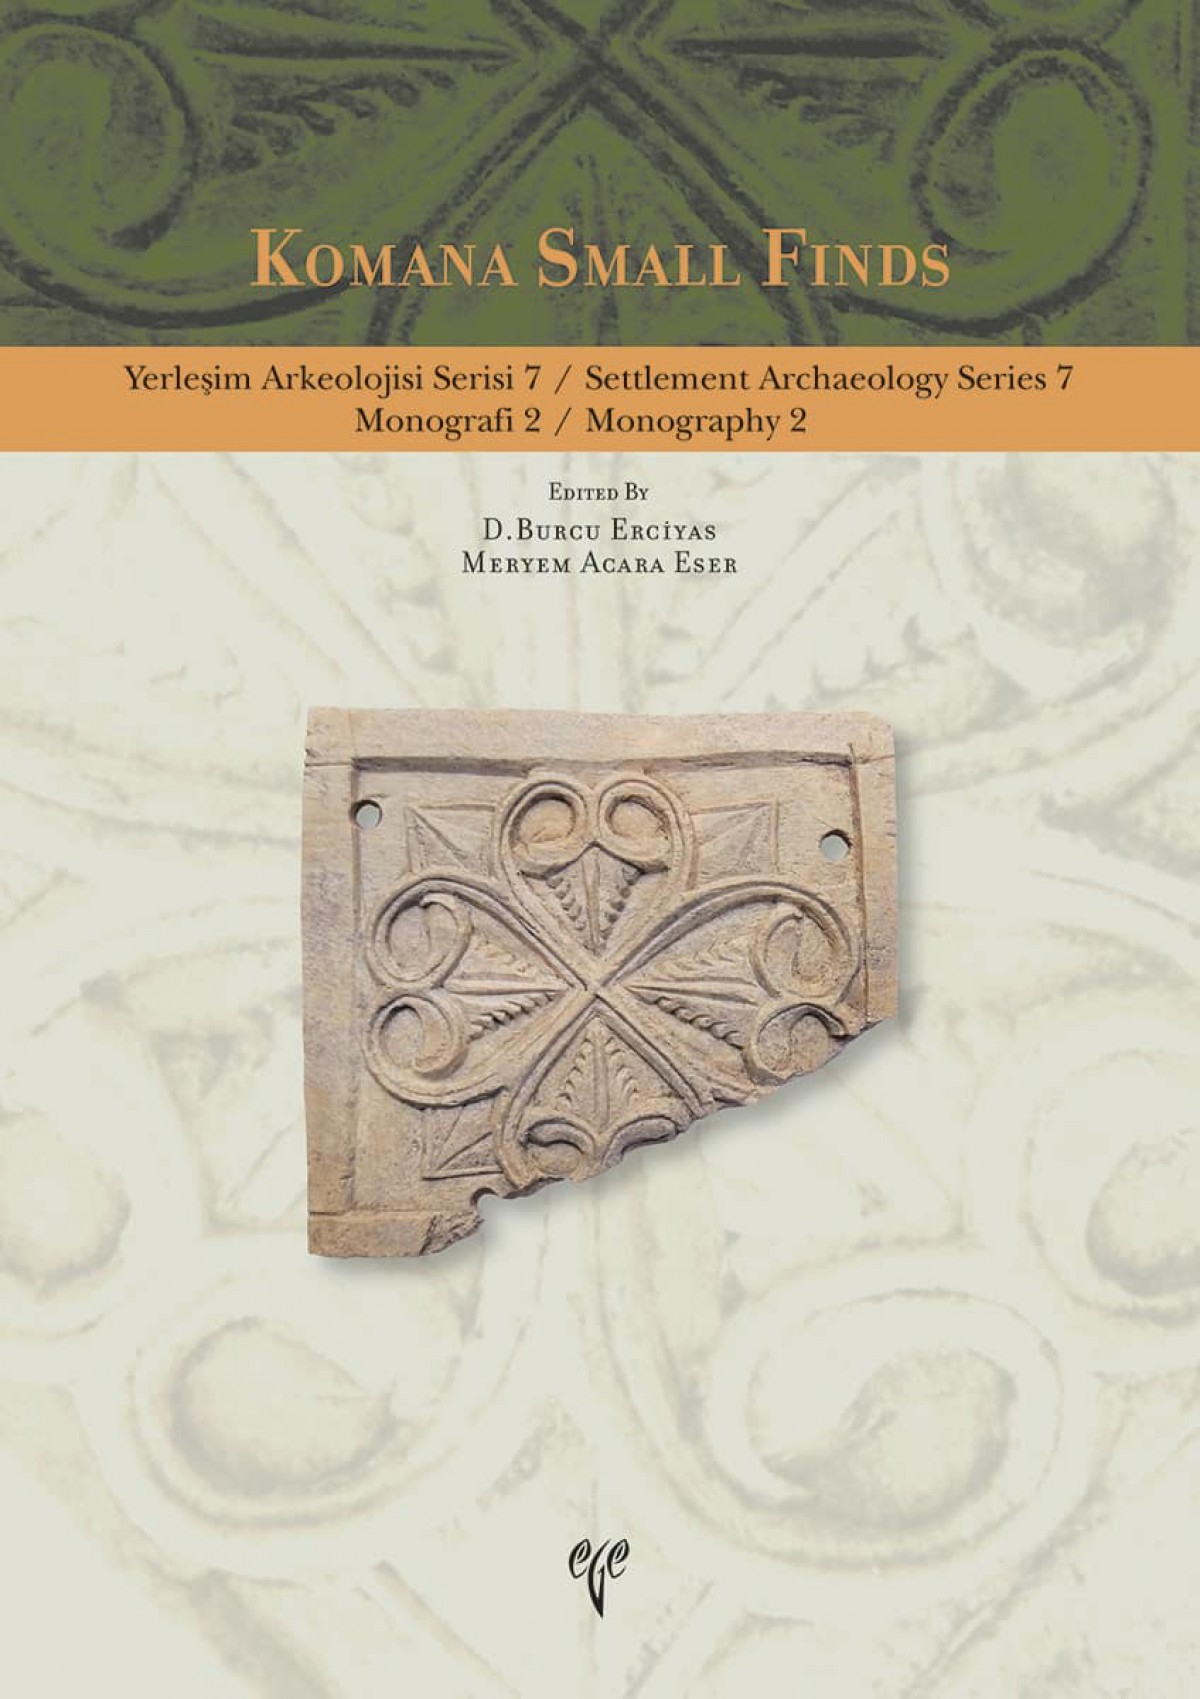 Komana Small Finds - Yerleşim Arkeolojisi Serisi 7